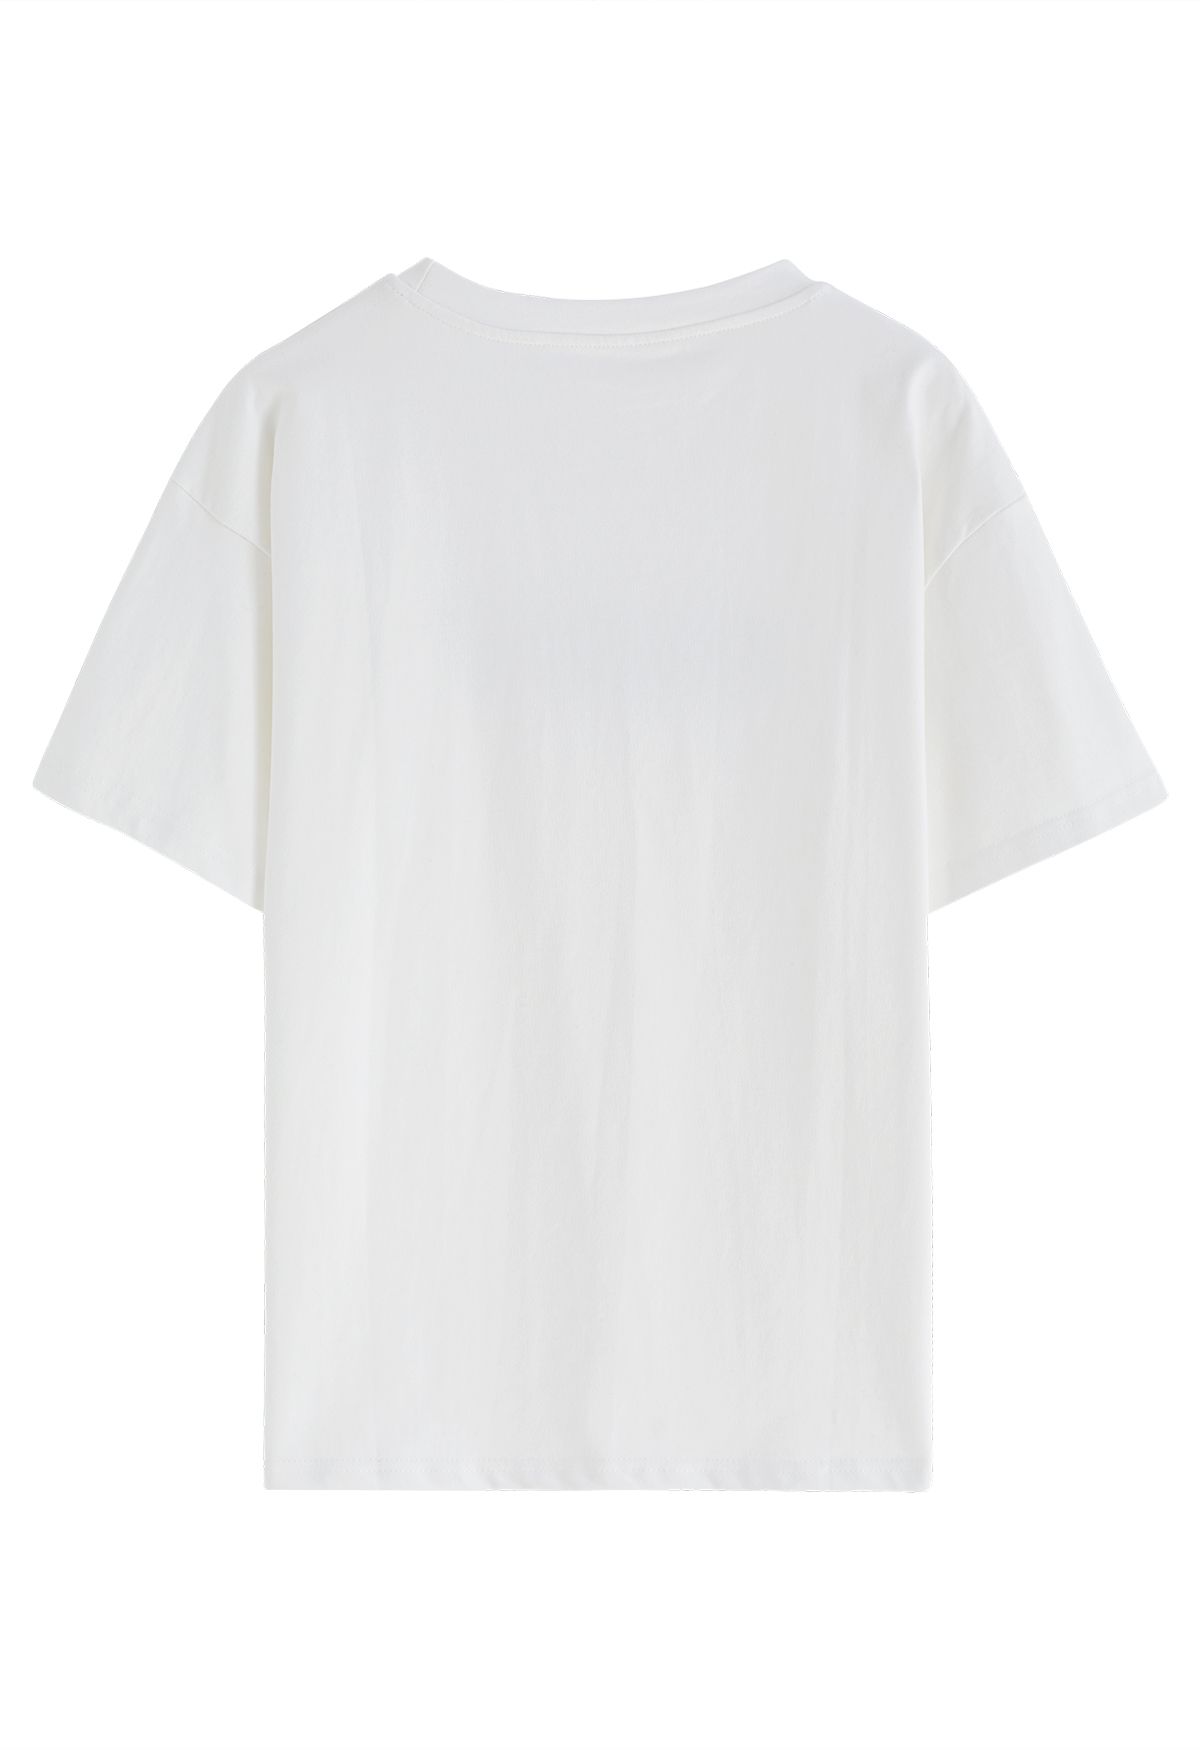 Paris Print Round Neck T-Shirt in White